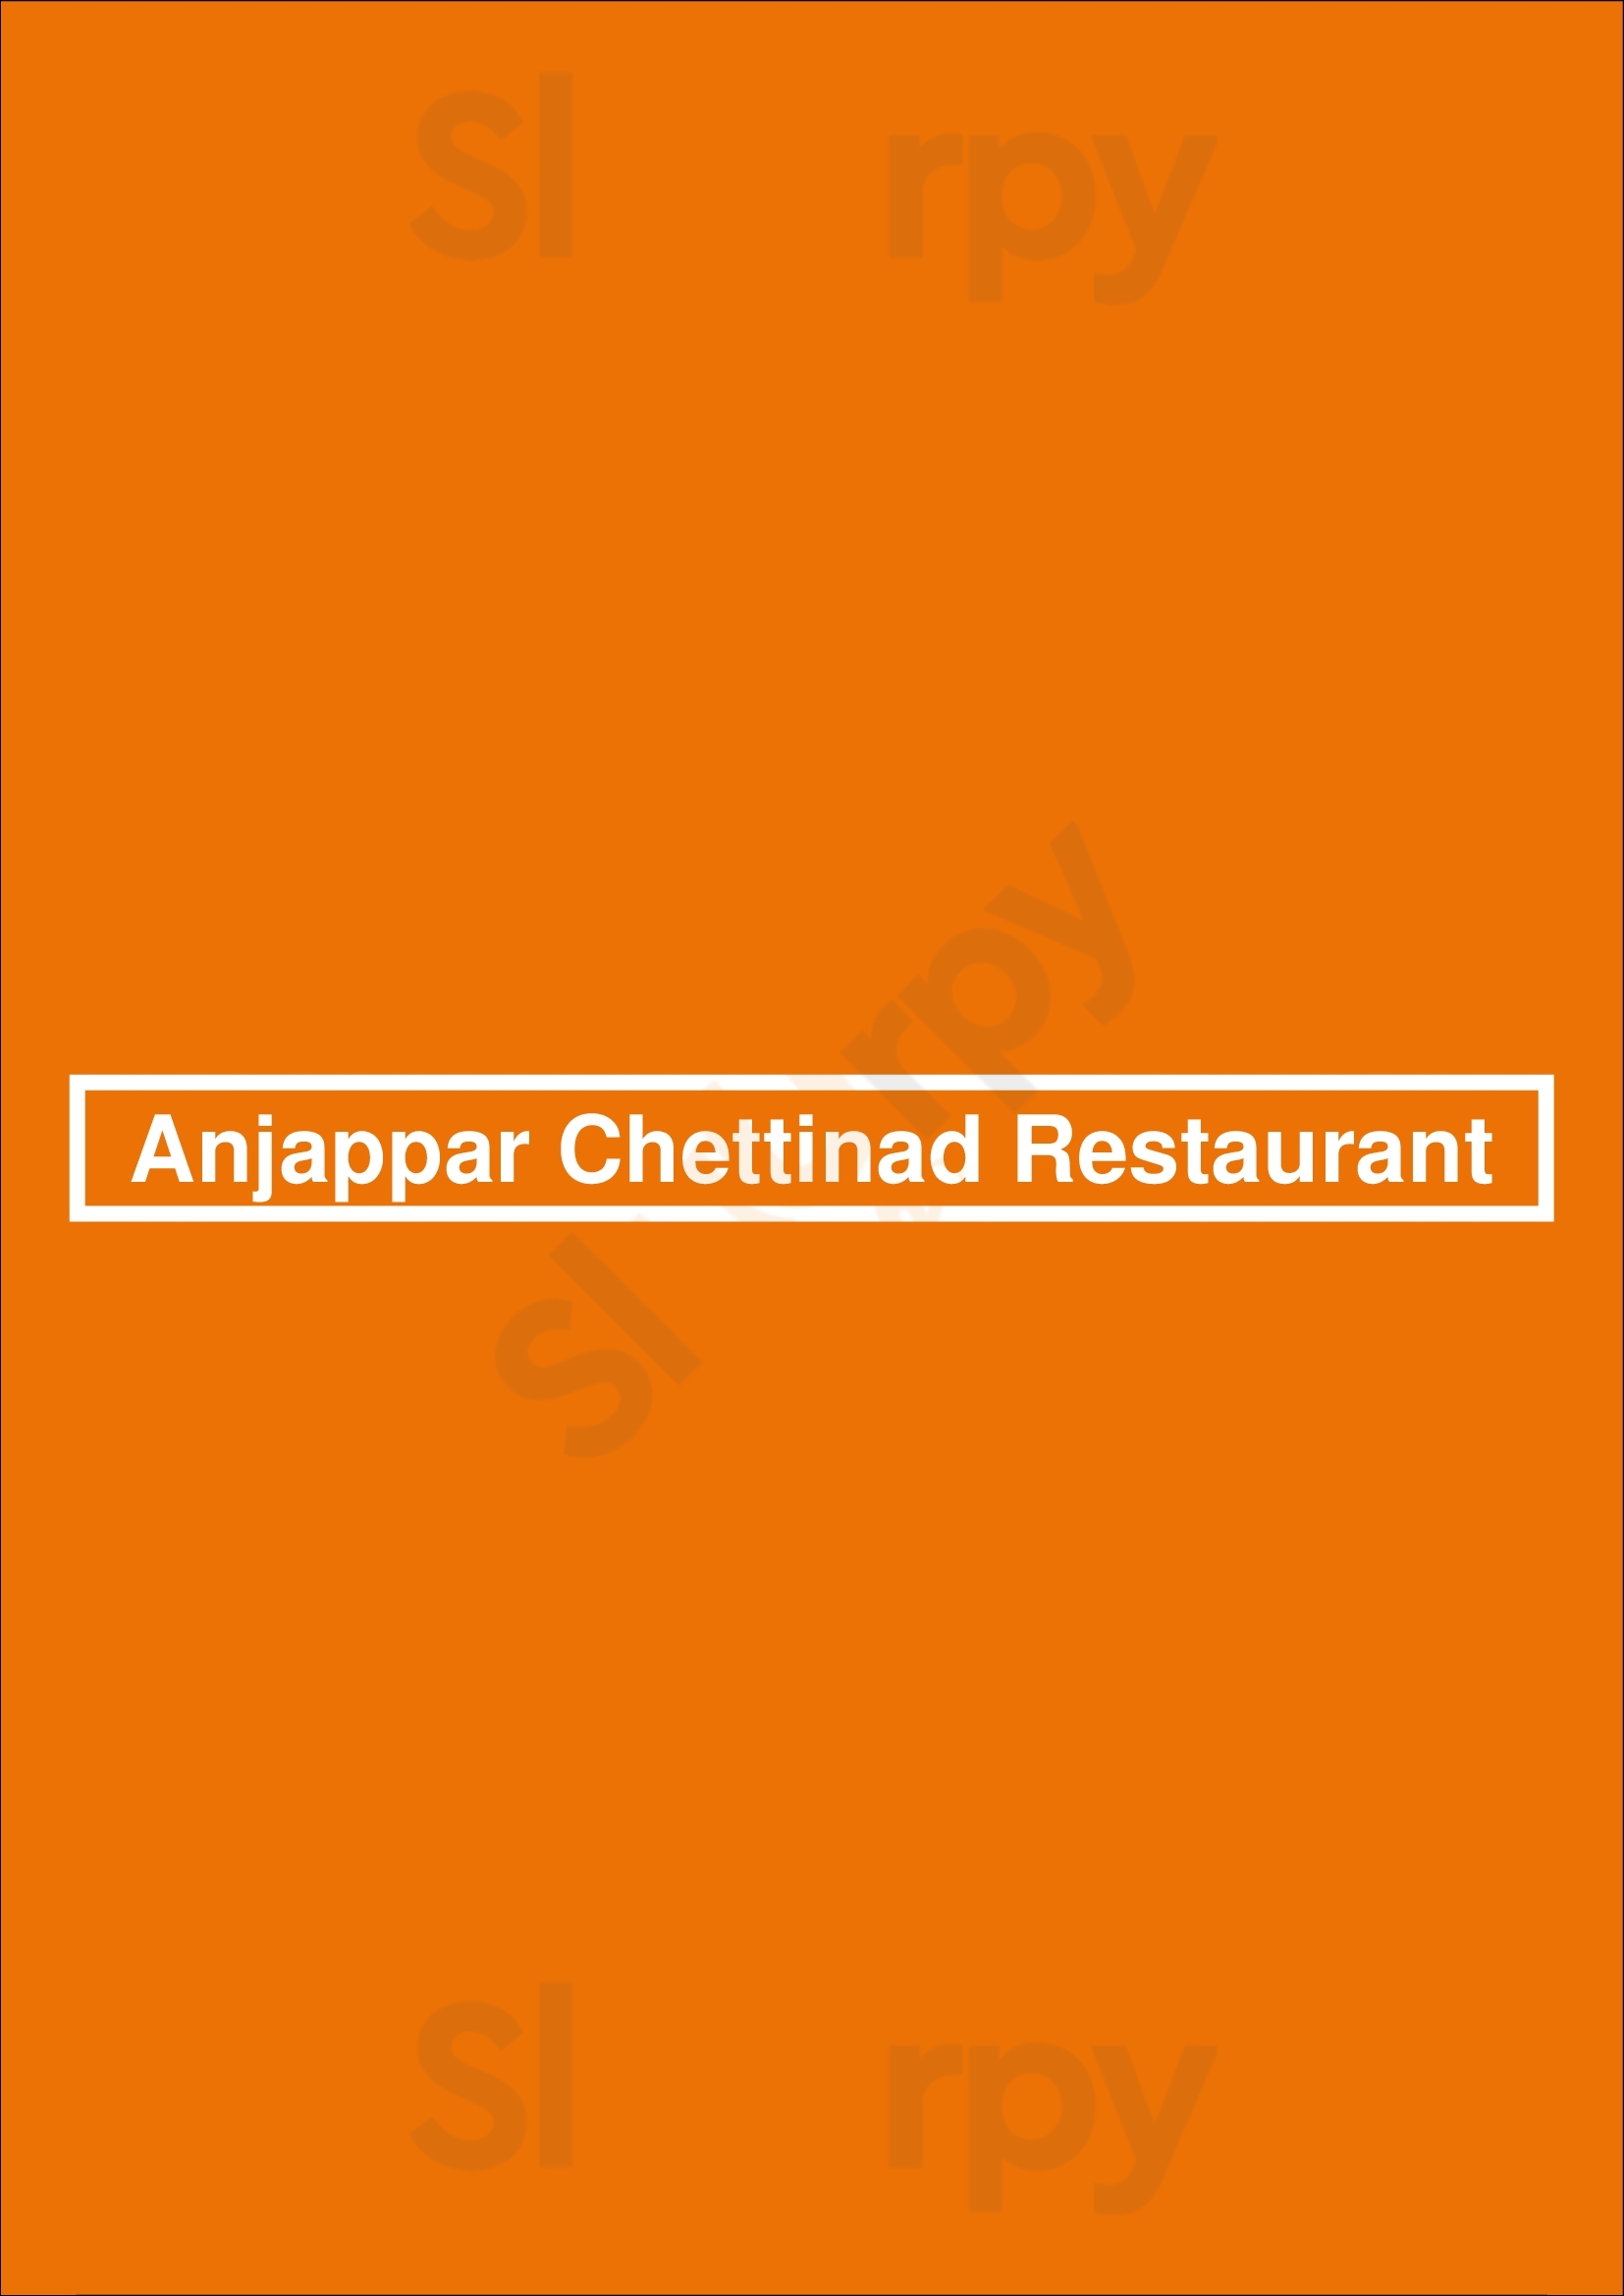 Anjappar Chettinad Restaurant Toronto Menu - 1